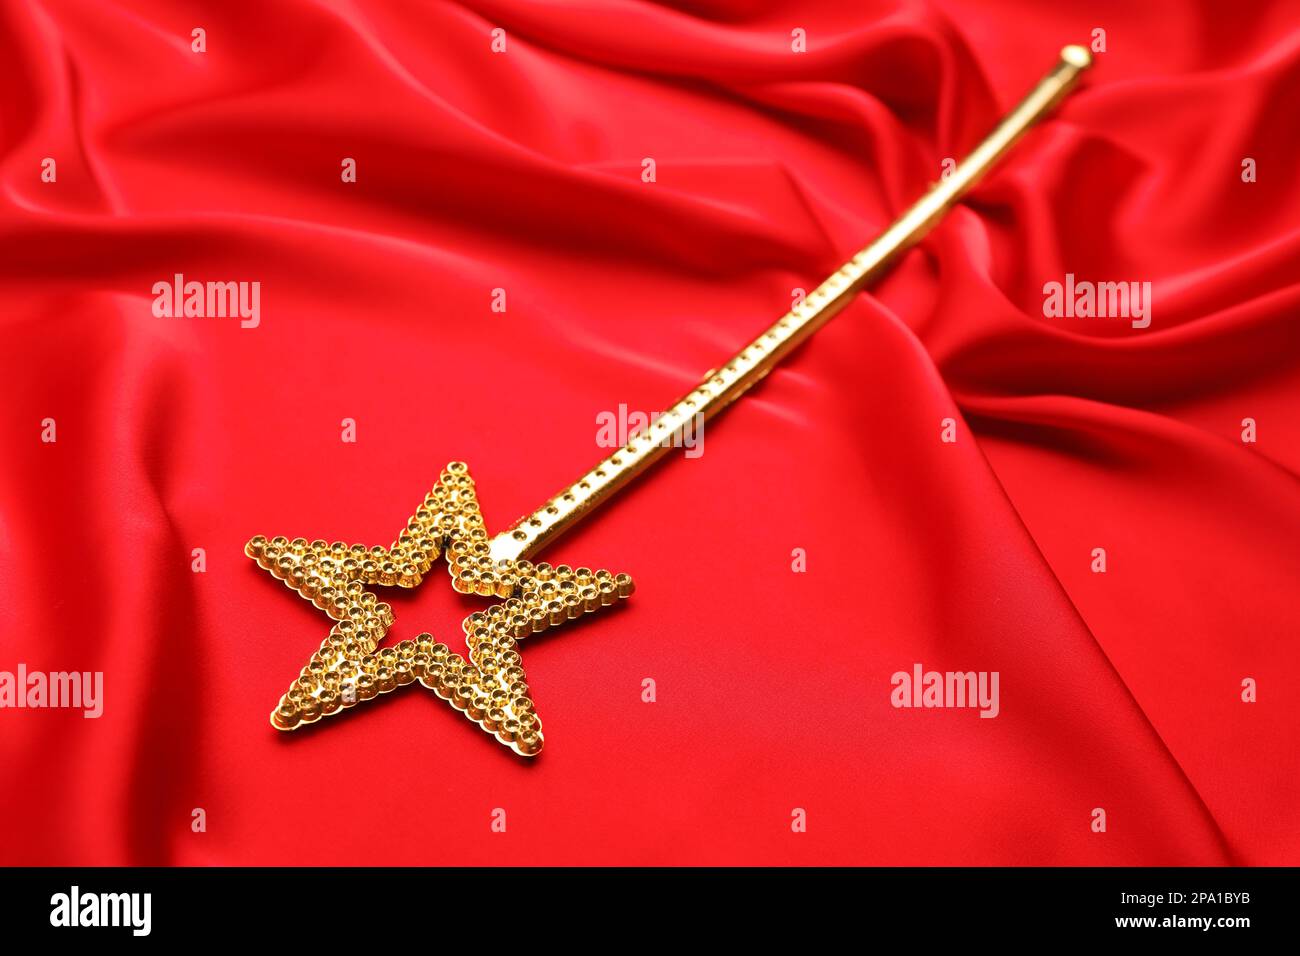 Beautiful golden magic wand on red fabric Stock Photo